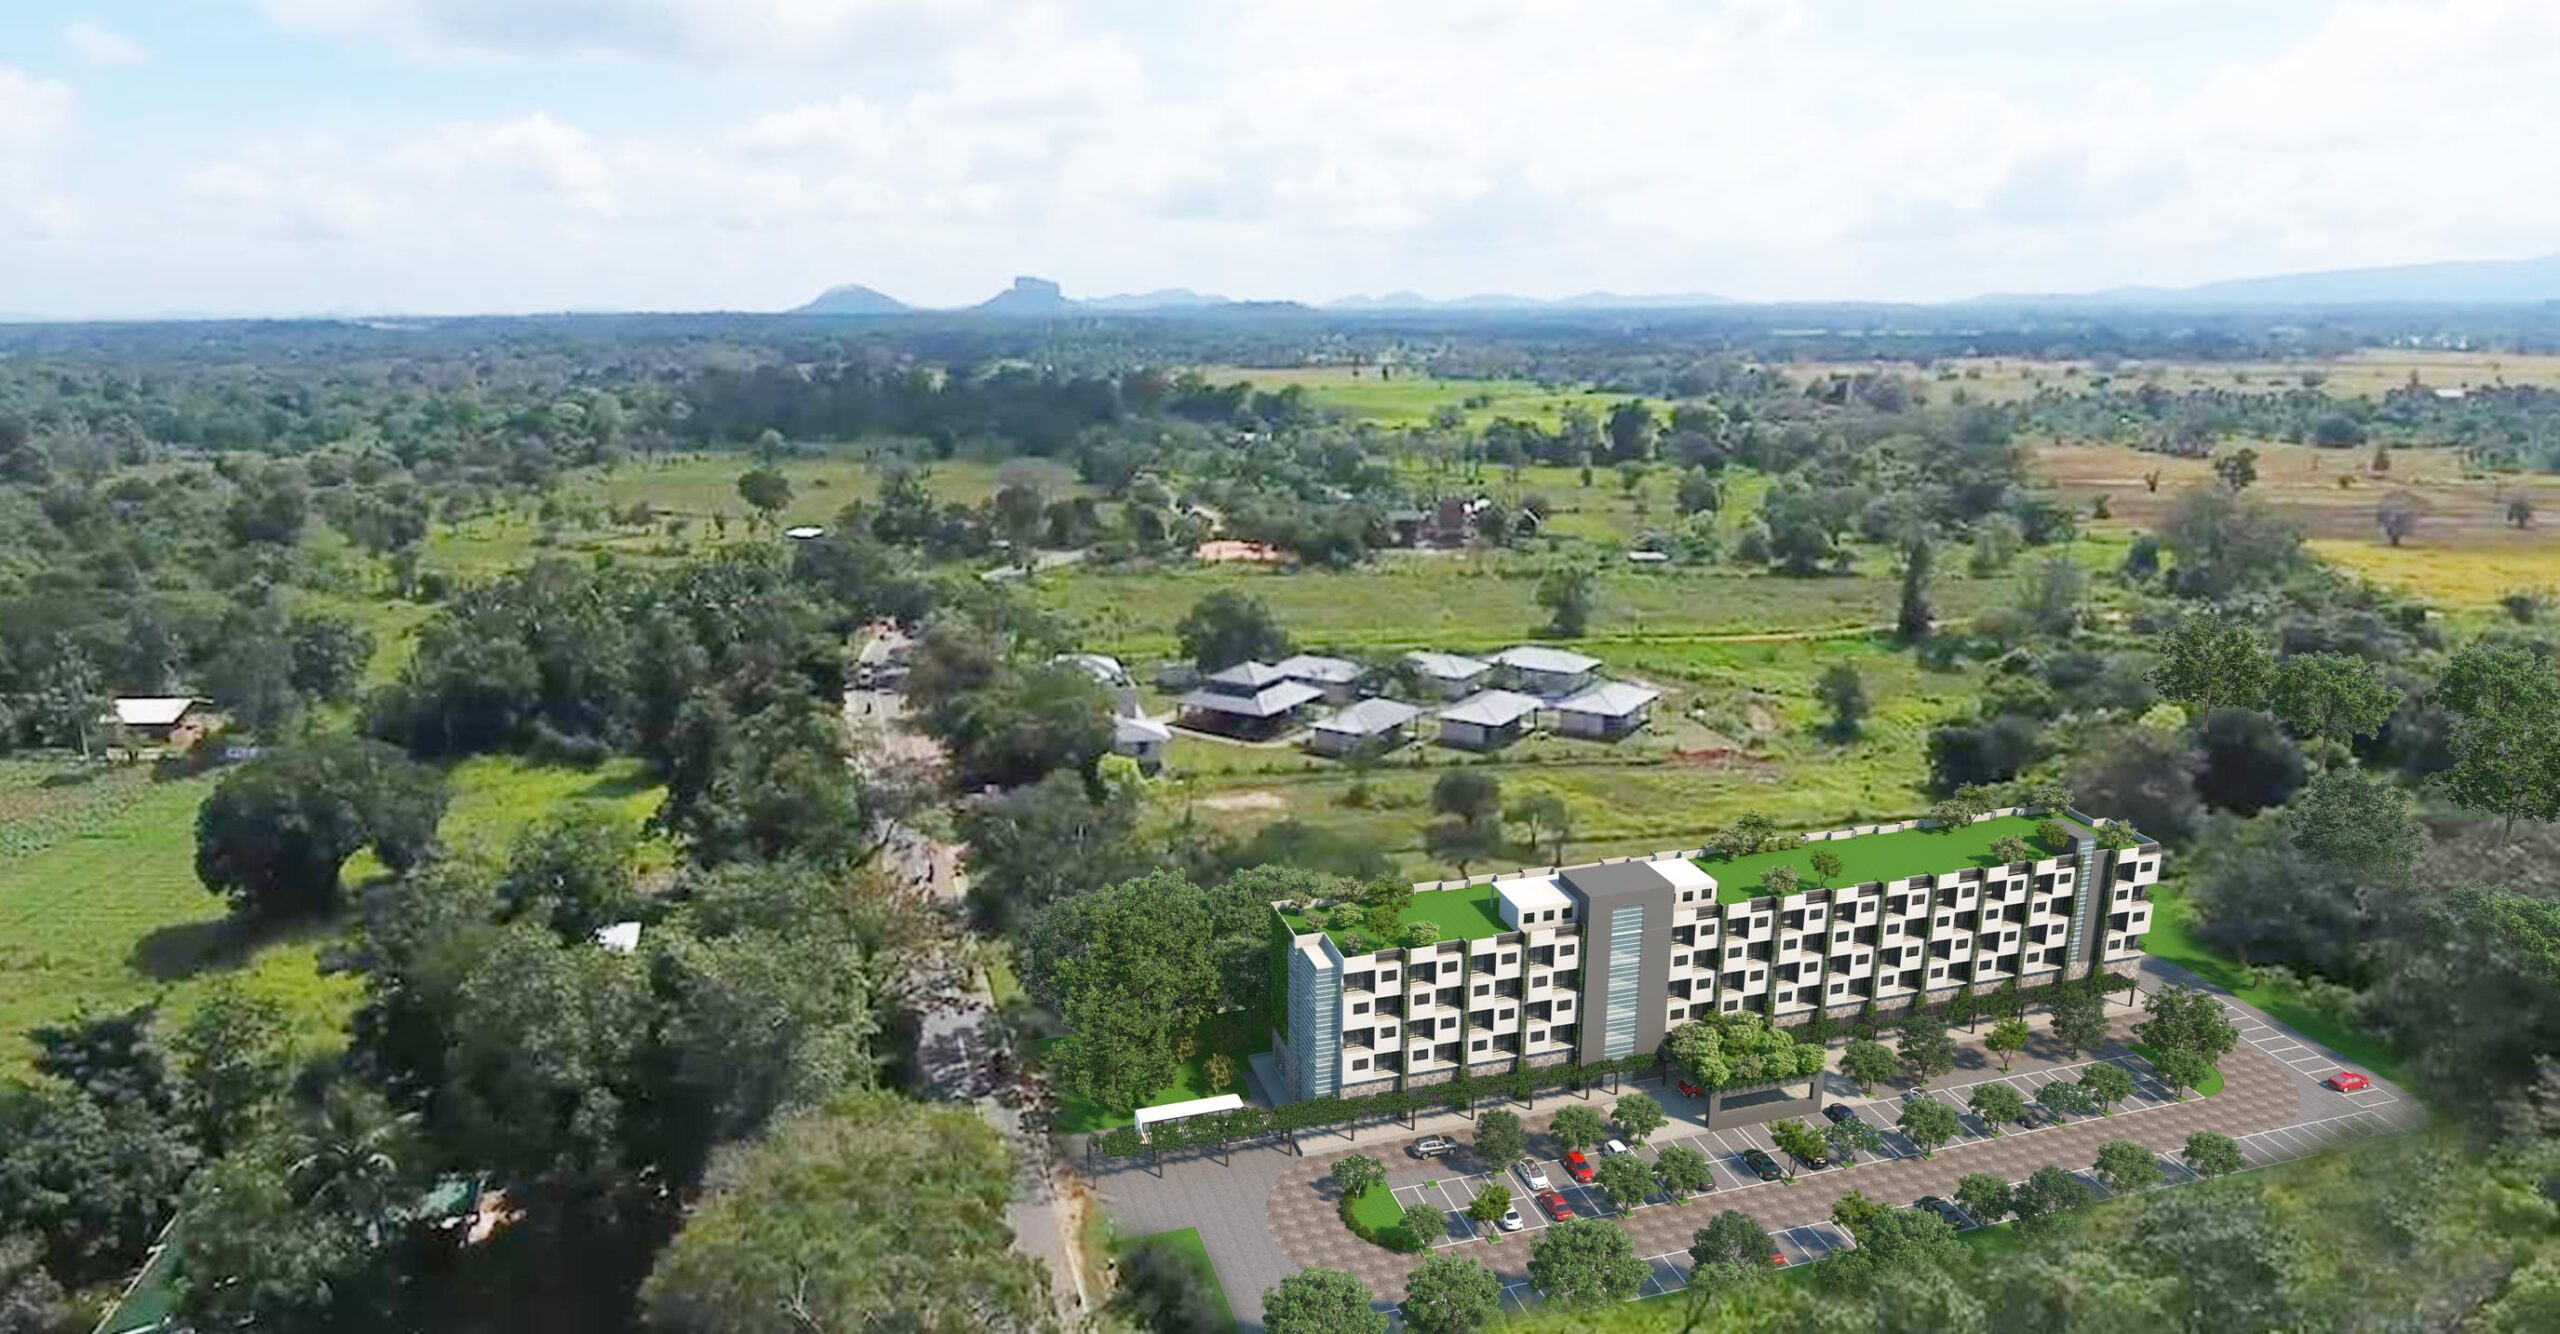 An image of the Sigiriya hotel site exterior